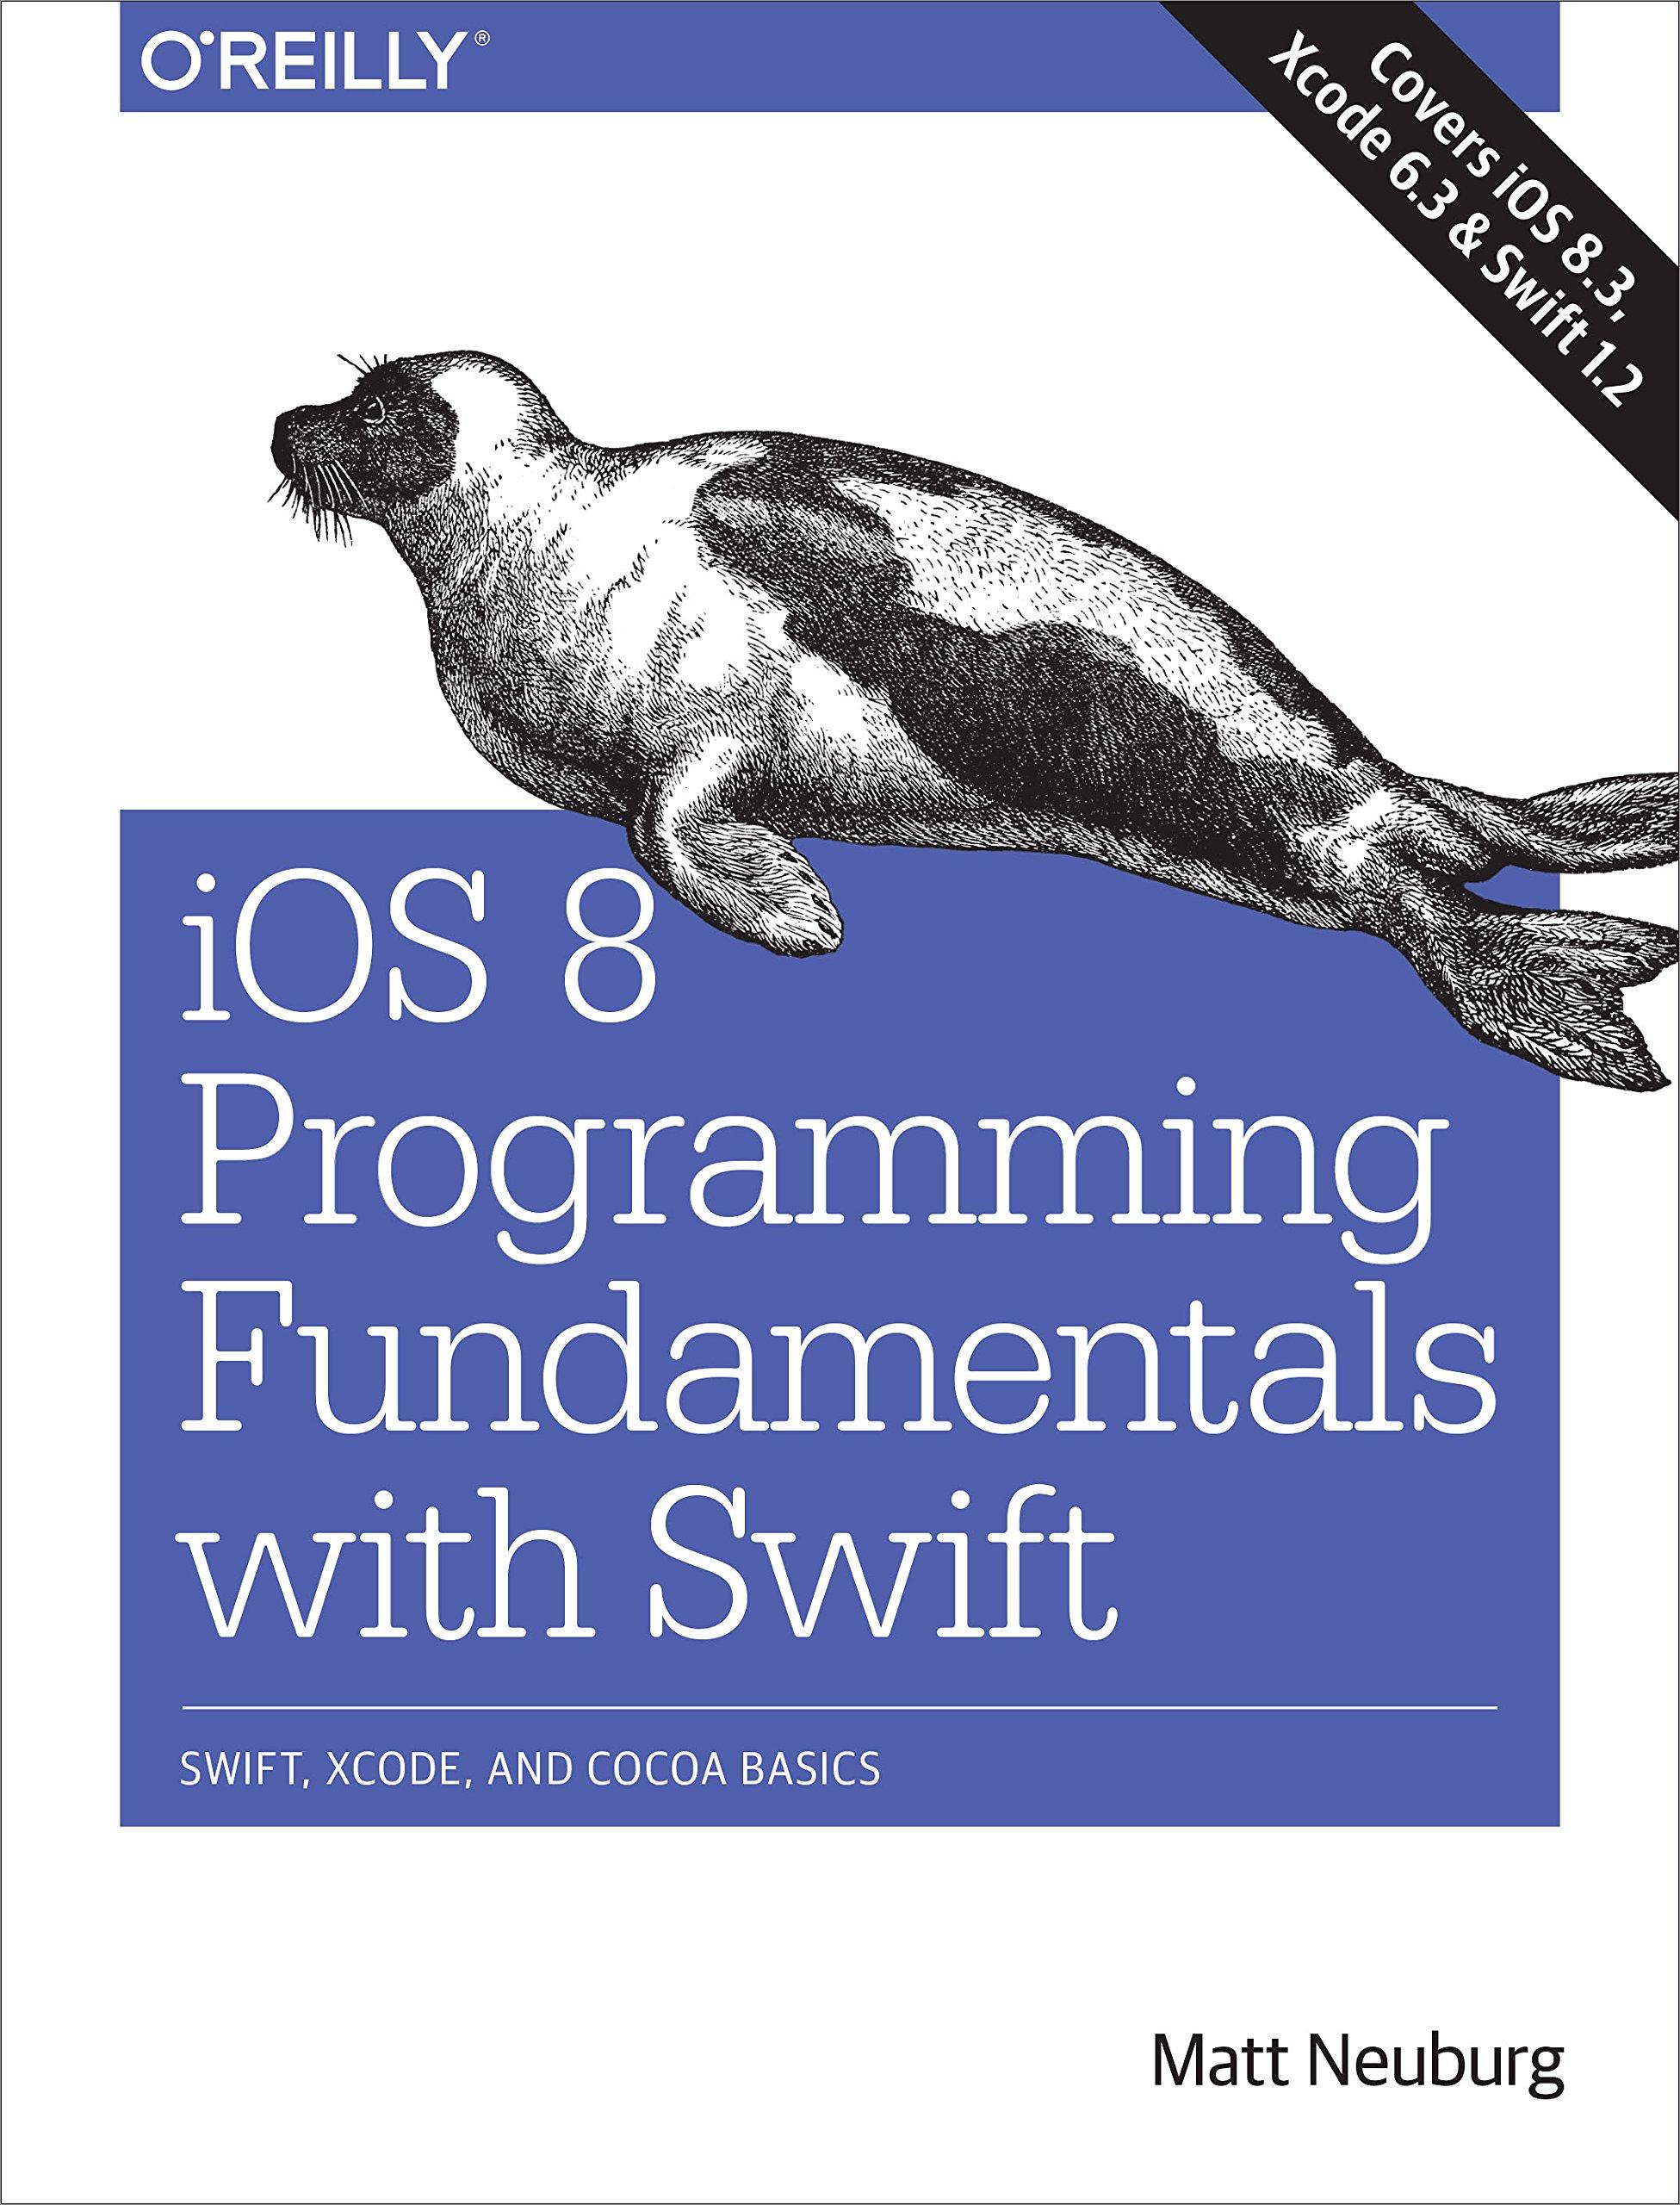 ios 8 programming fundamentals with swift swift xcode and cocoa basics 1st edition matt neuburg 1491908904,